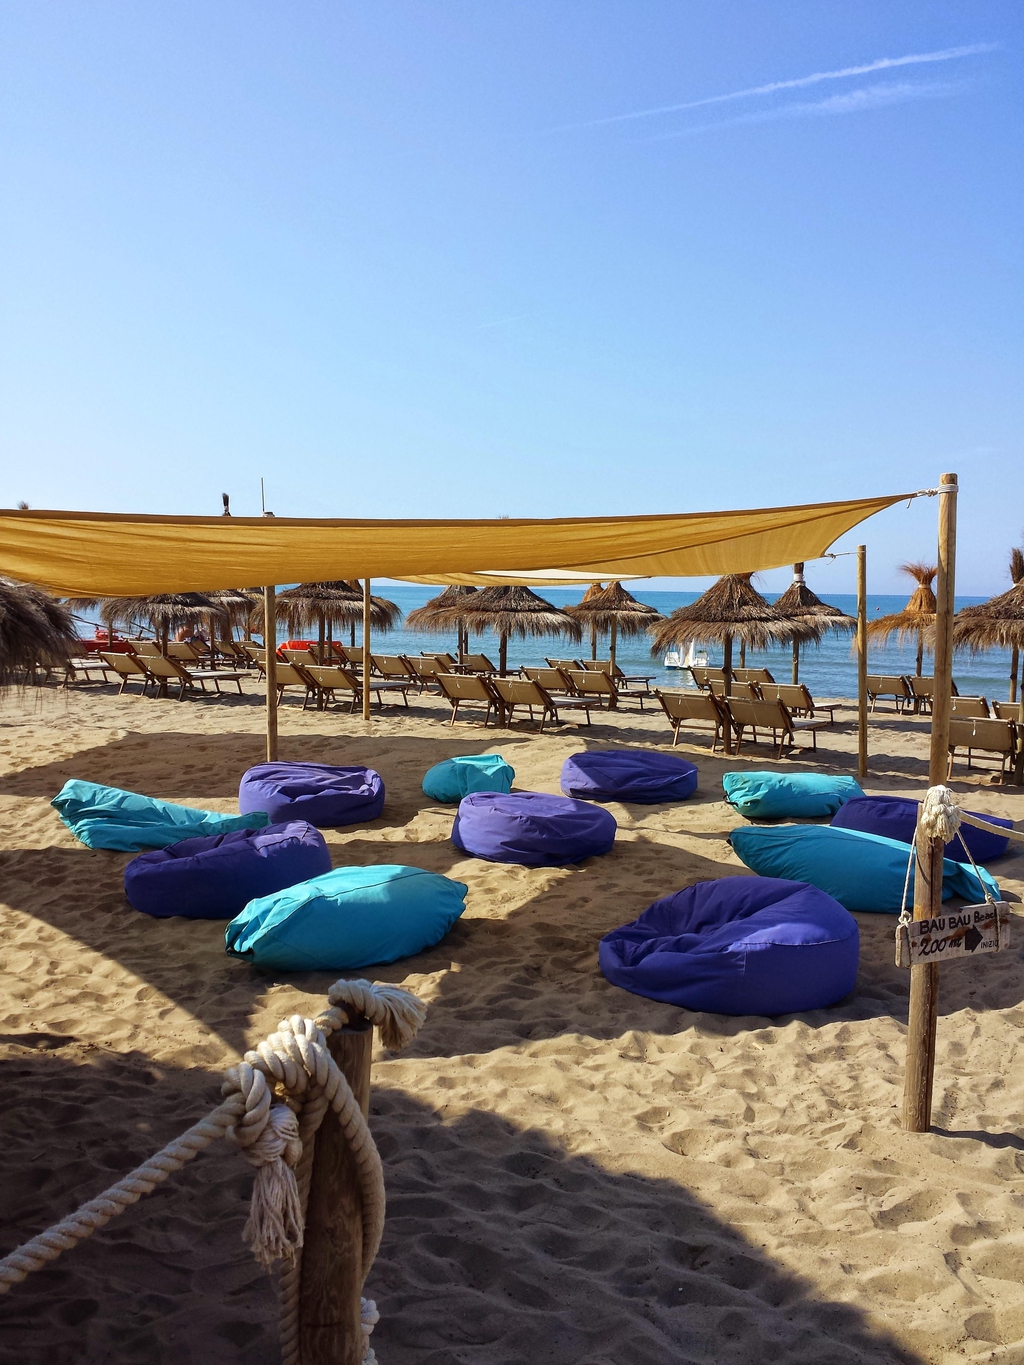 Fuorirotta Beach Club - Marina di Grosseto, (Grosseto), Toscana